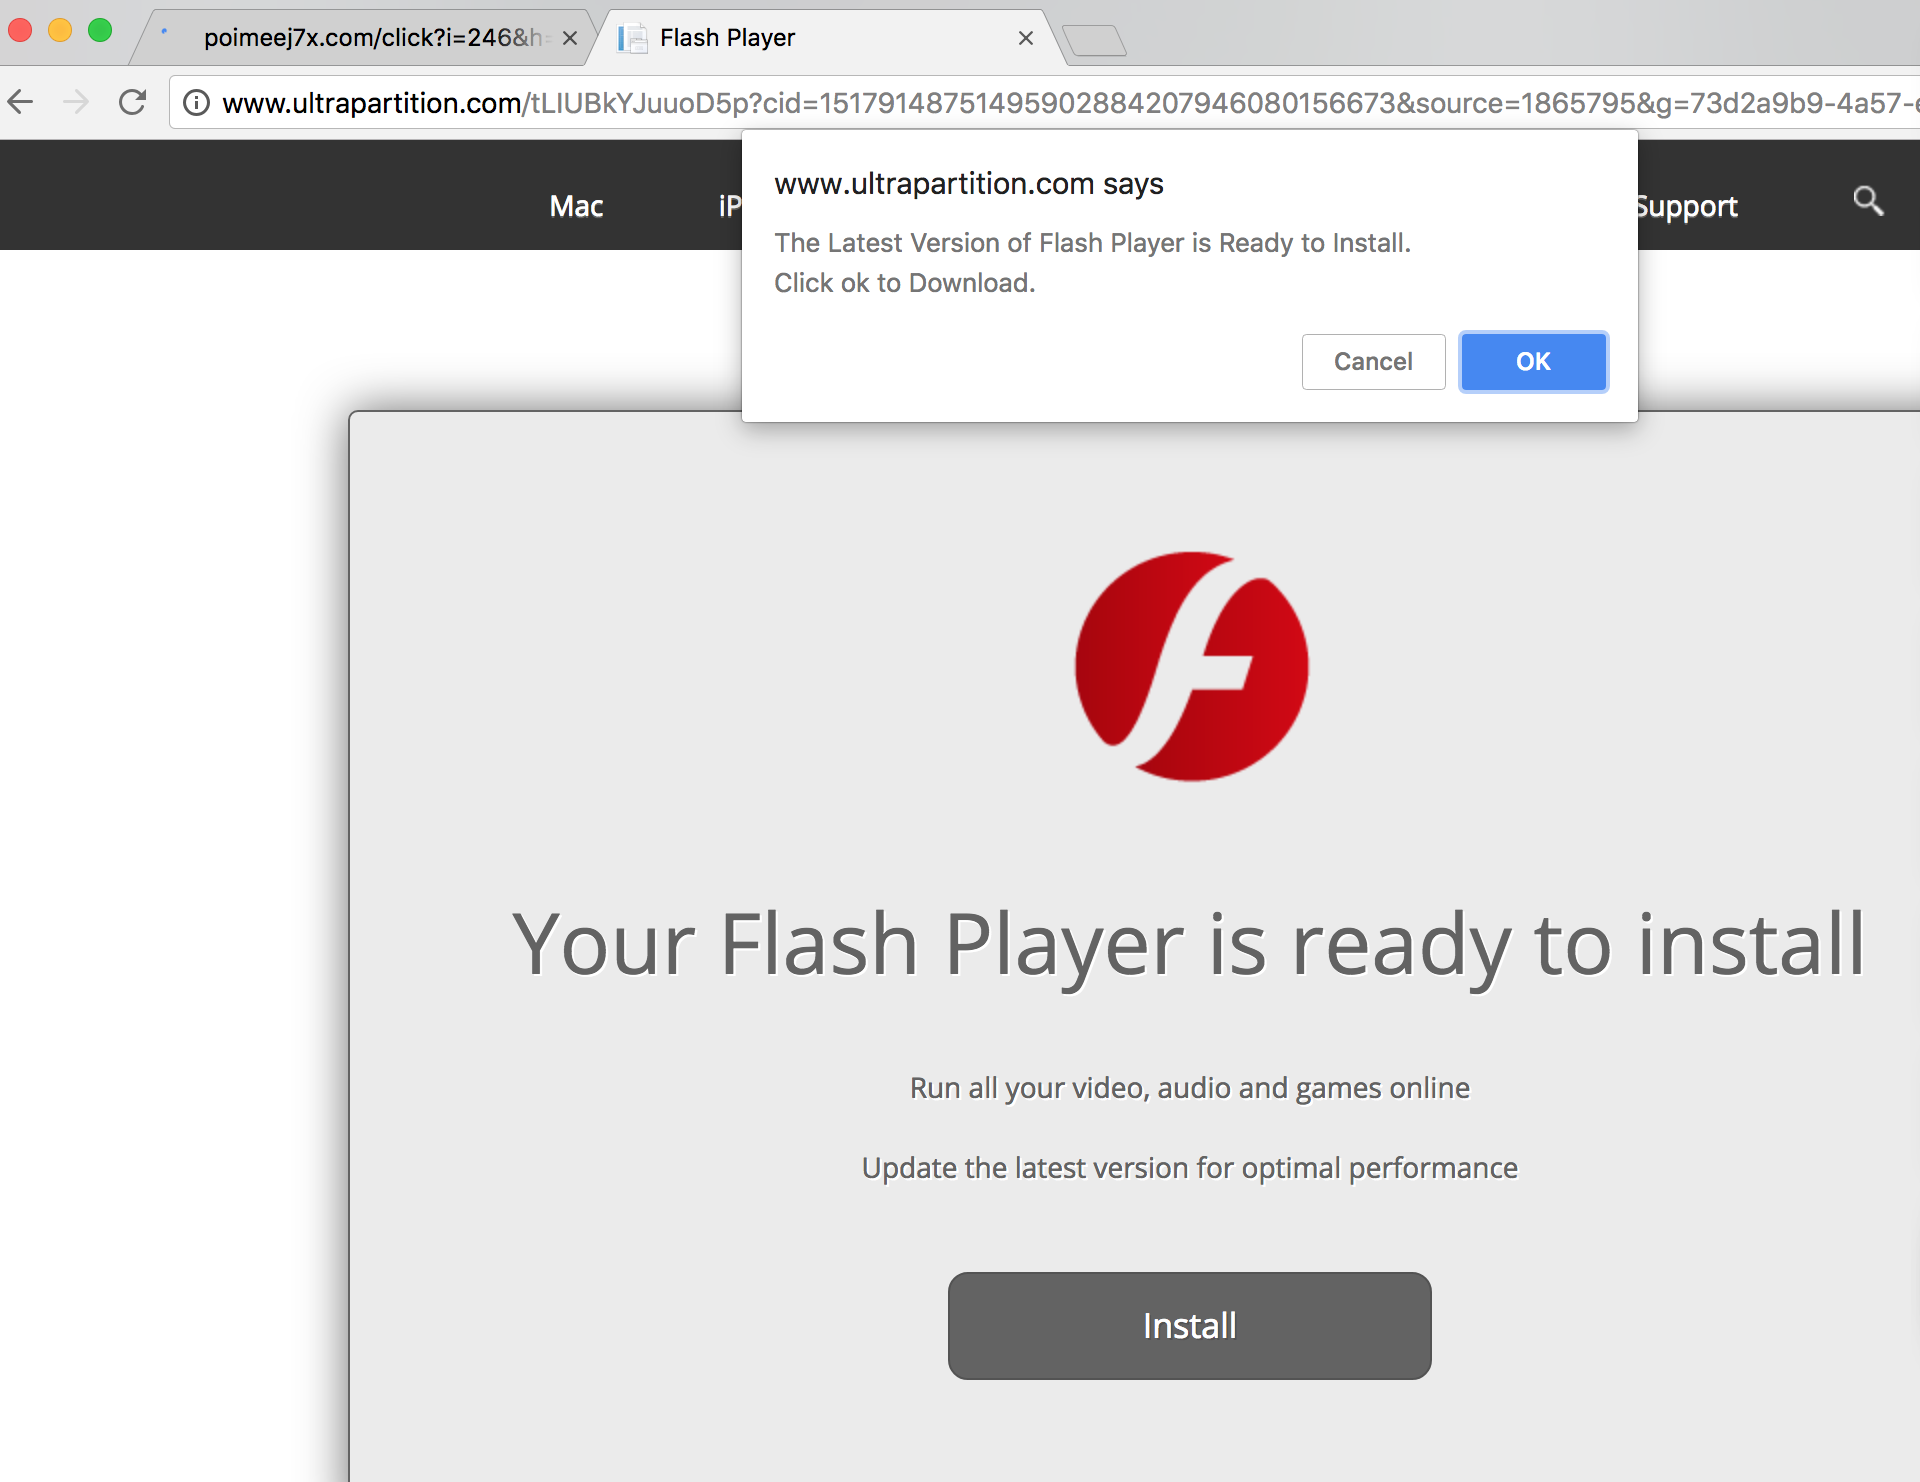 Ultrapartition.com fake Flash Player update alert